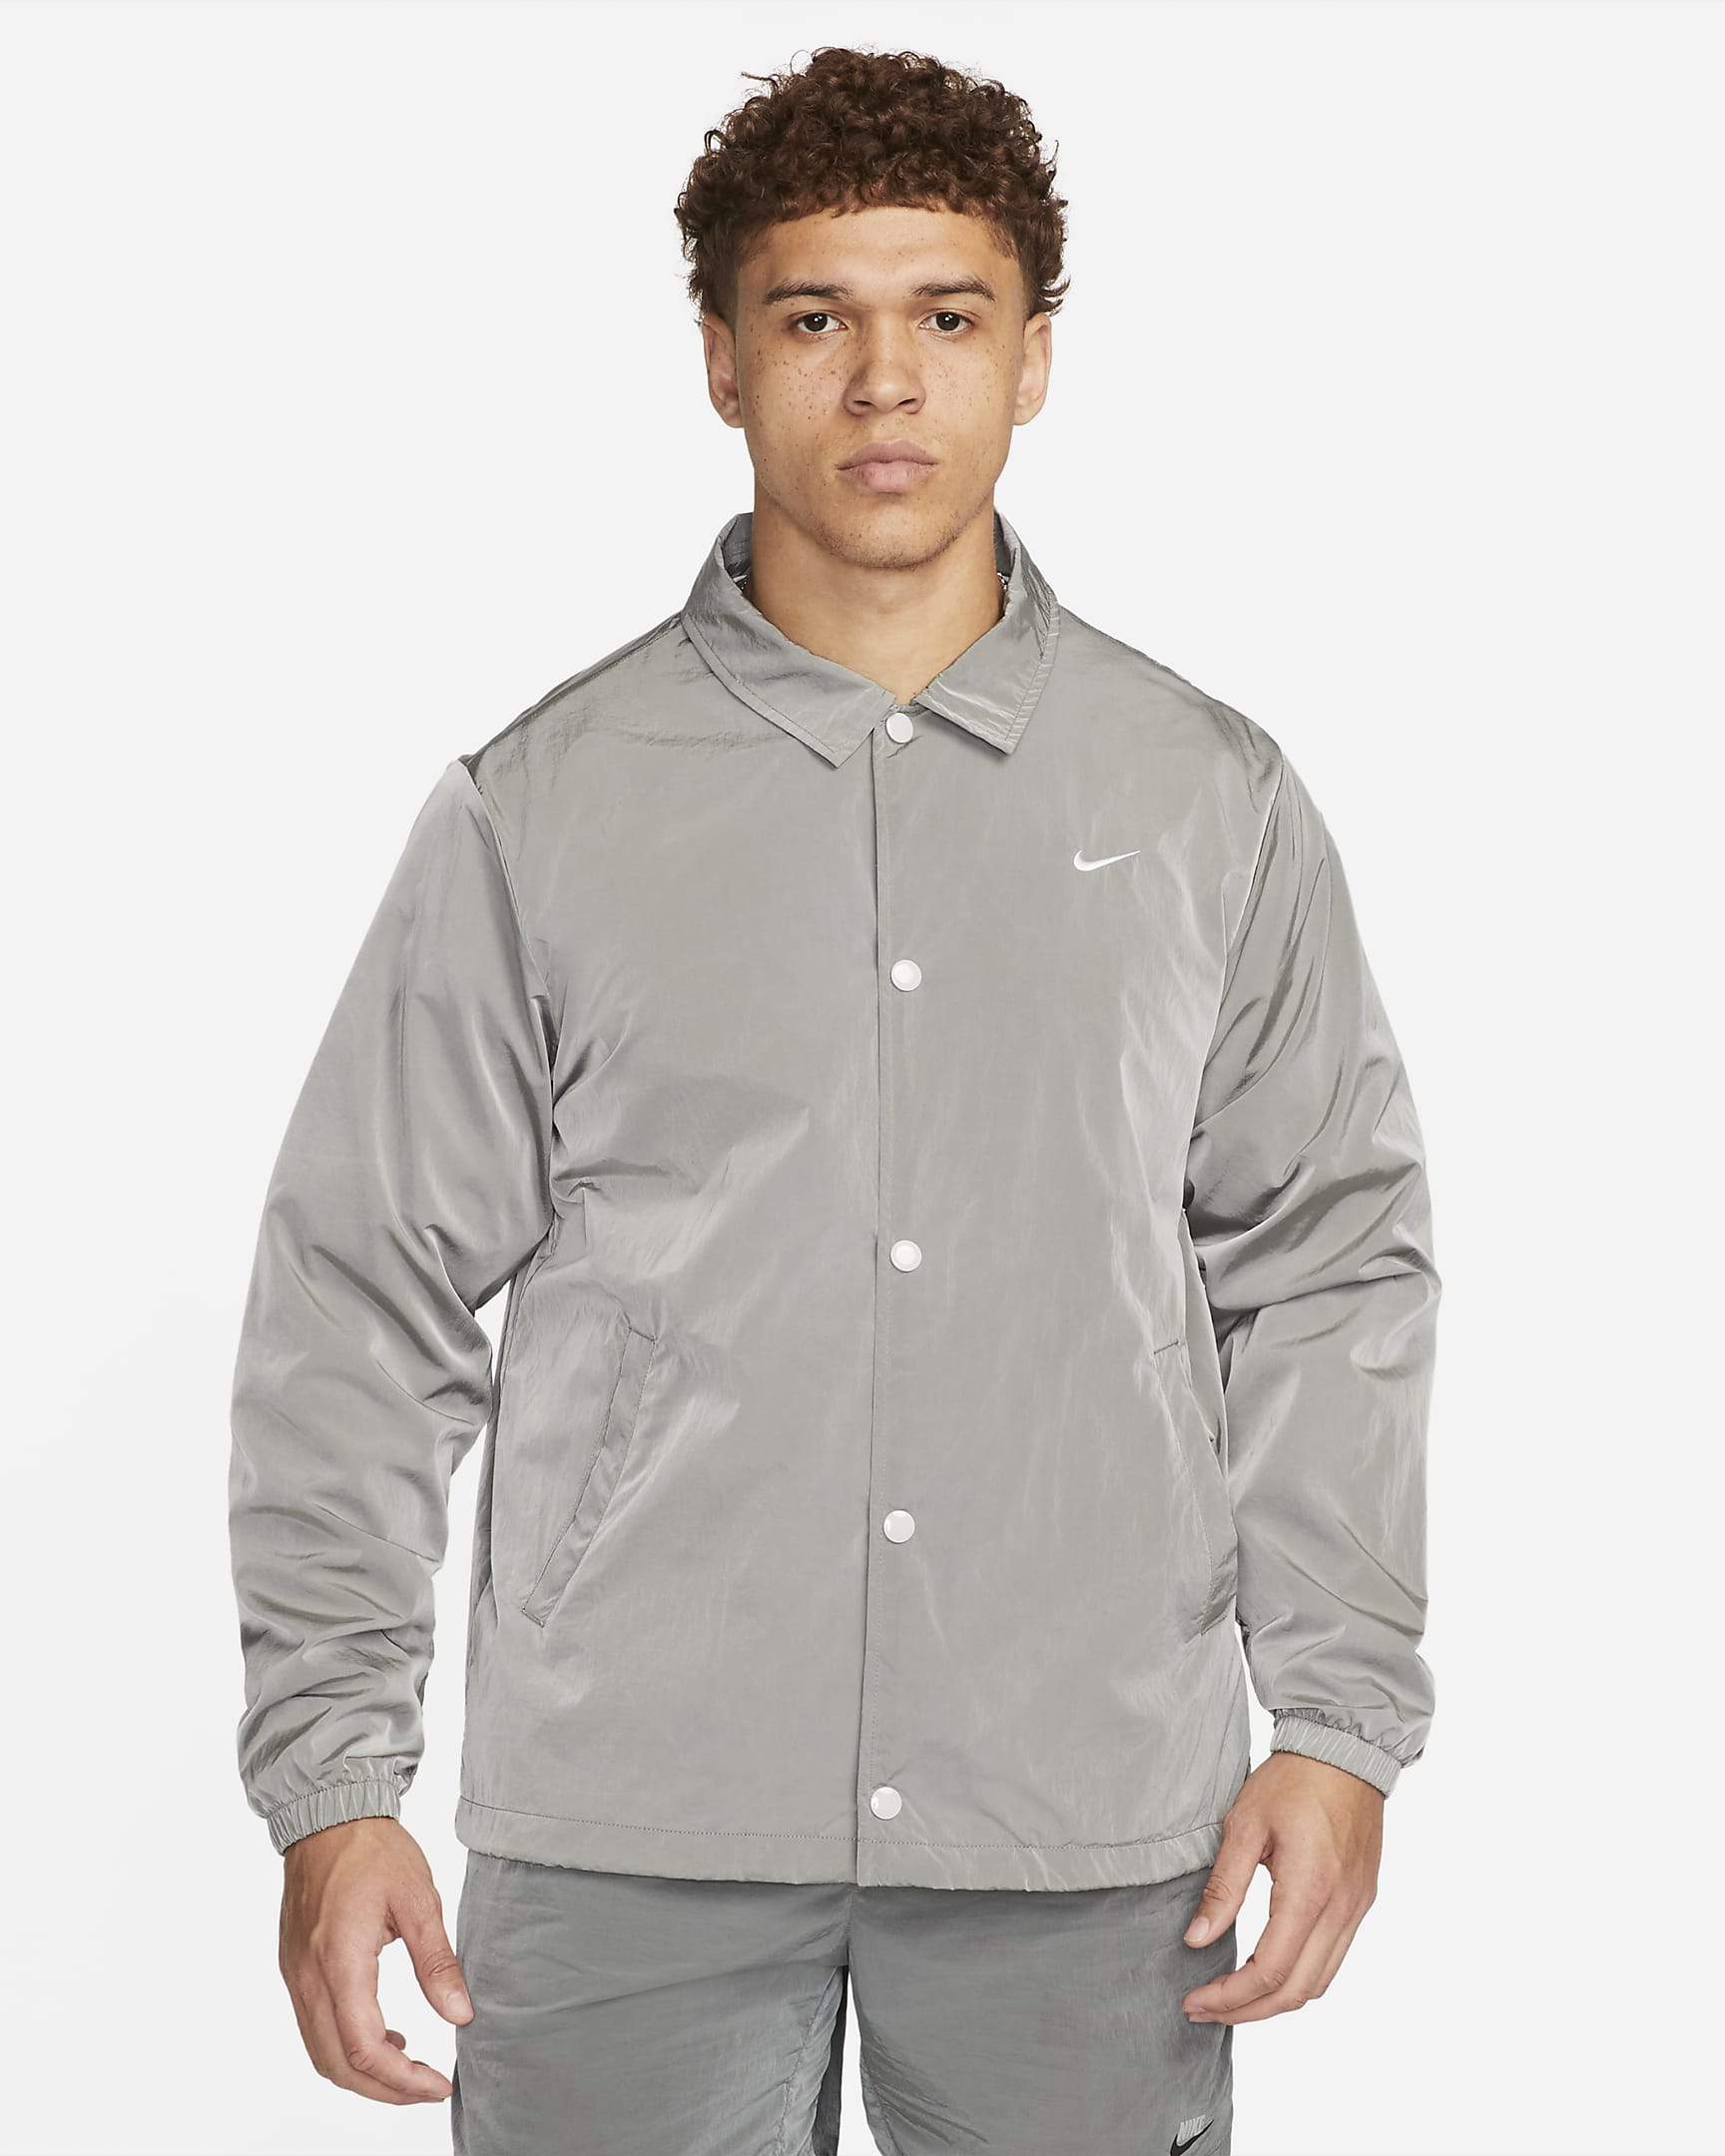 Nike Sportswear Authentics Men's Coaches Jacket. Nike.com